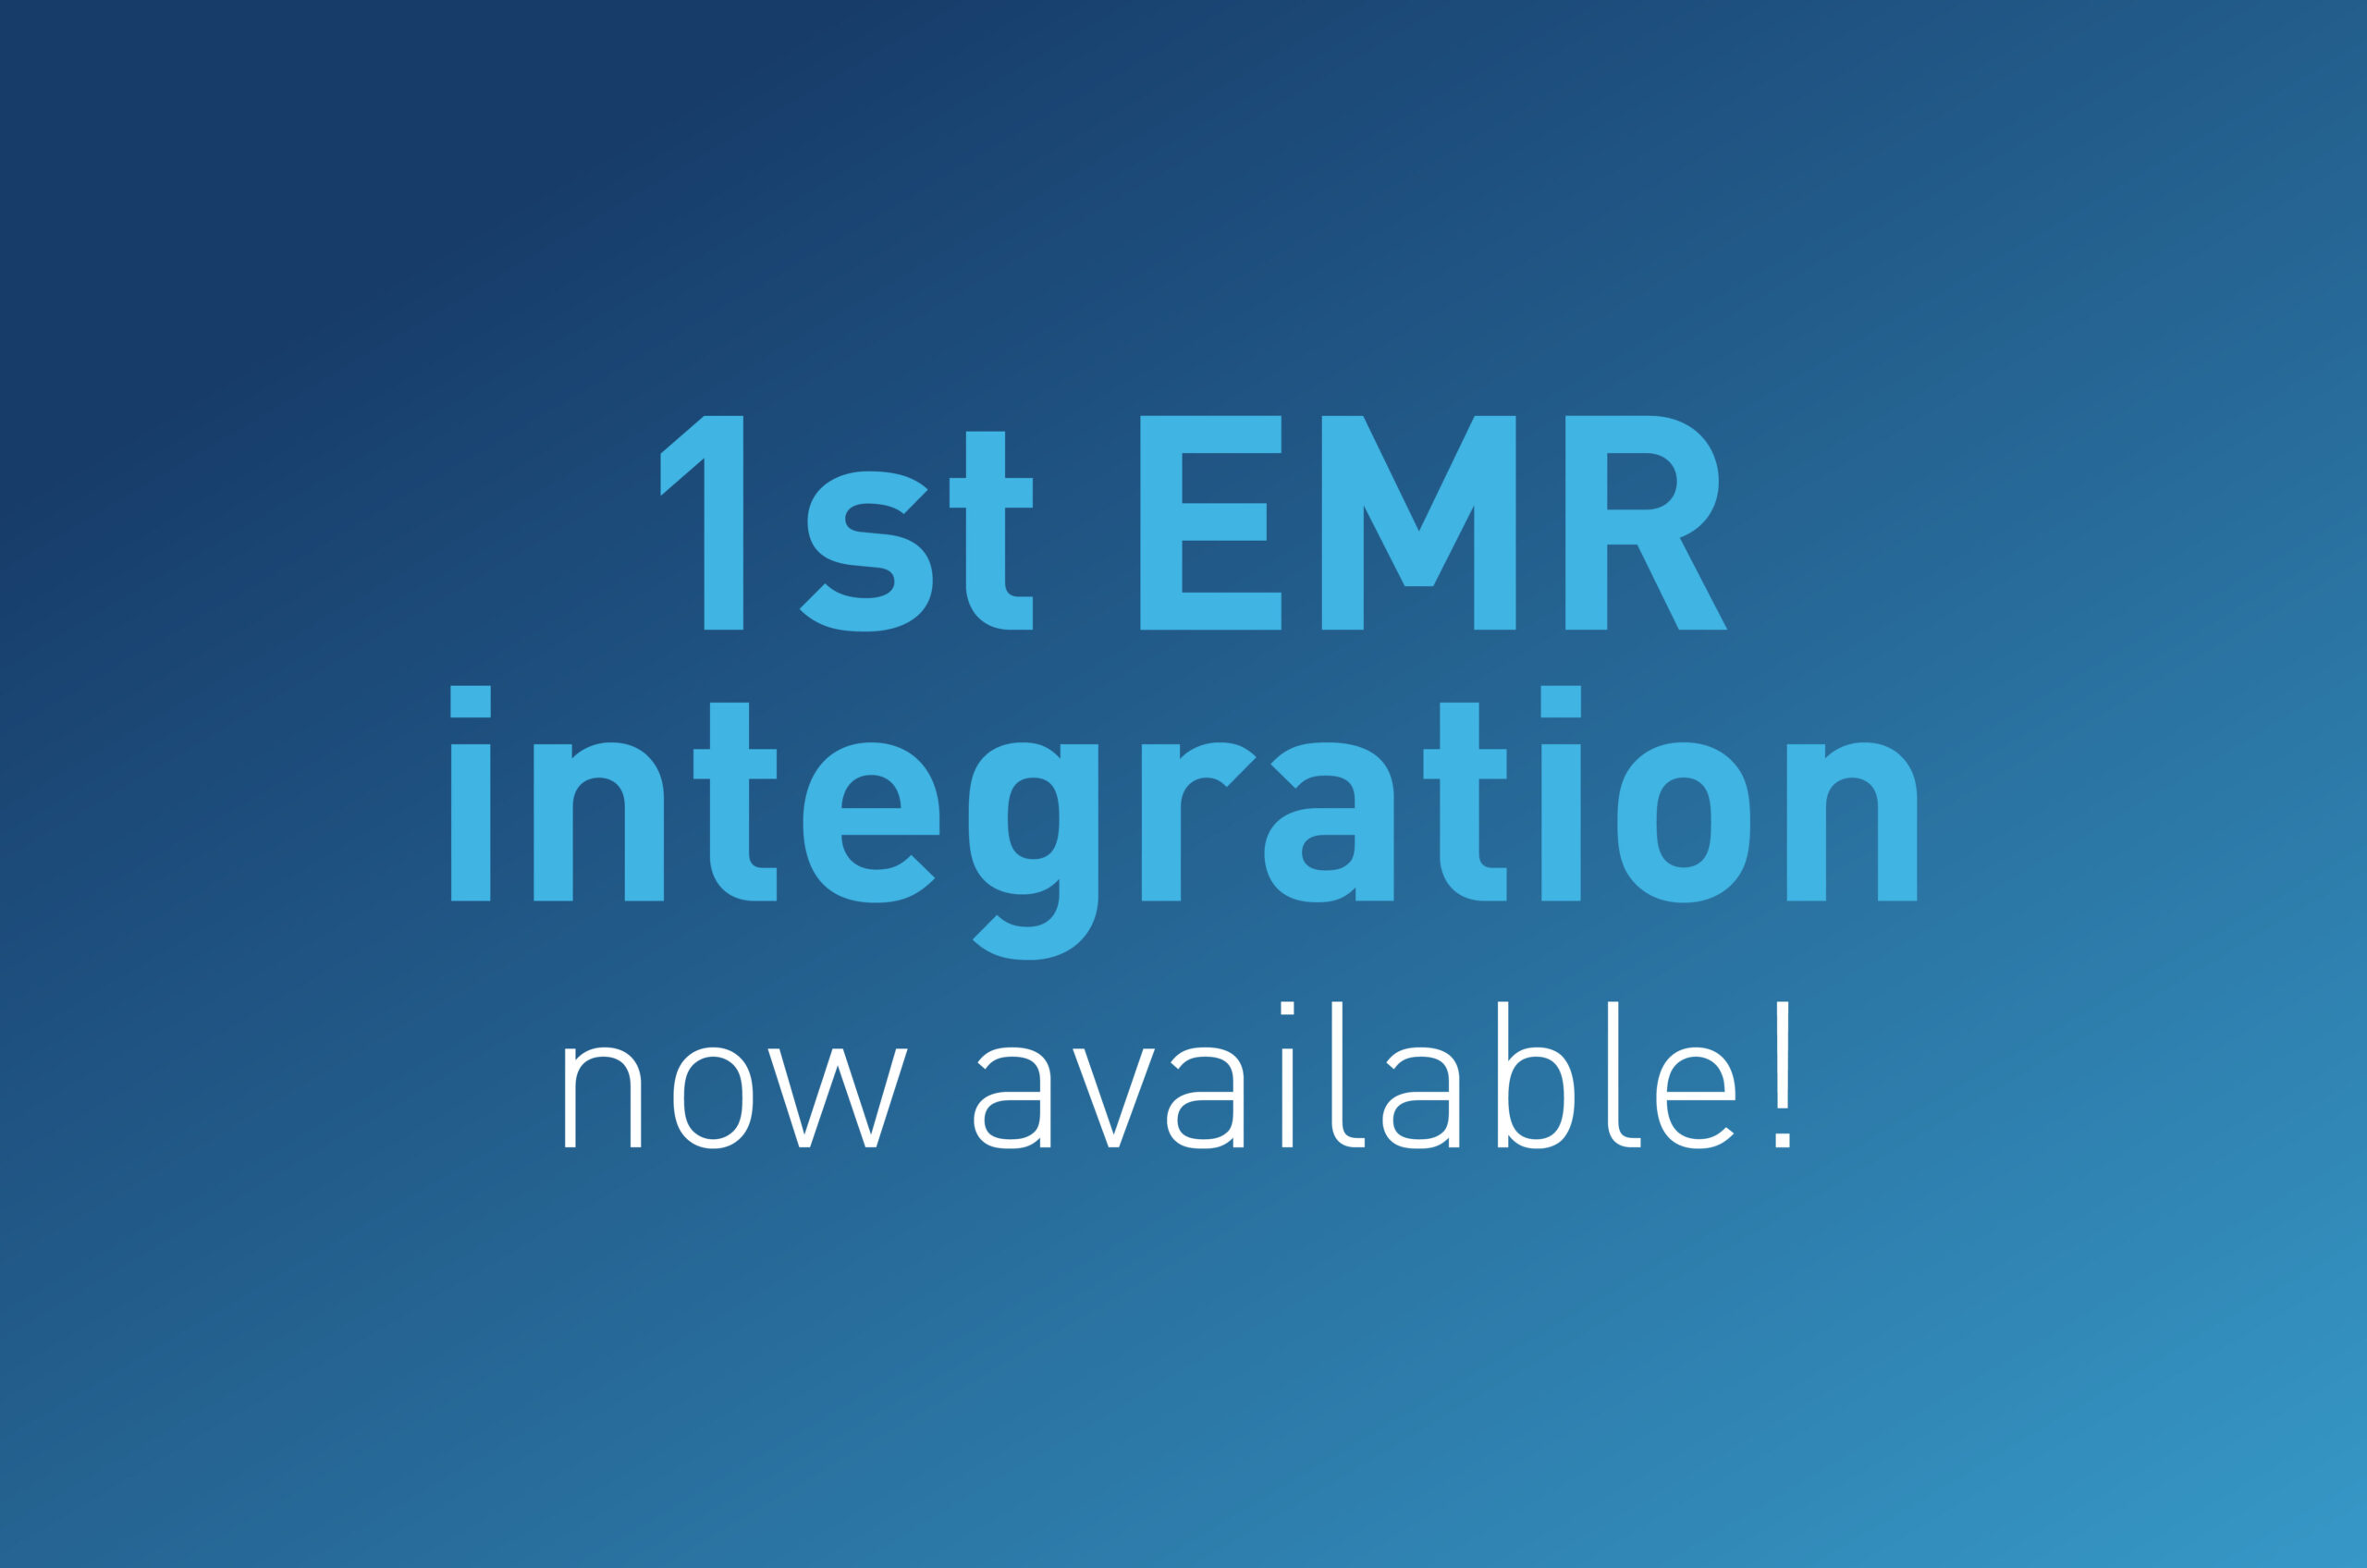 1st EMR integration now available for Provizio SEM Scanner